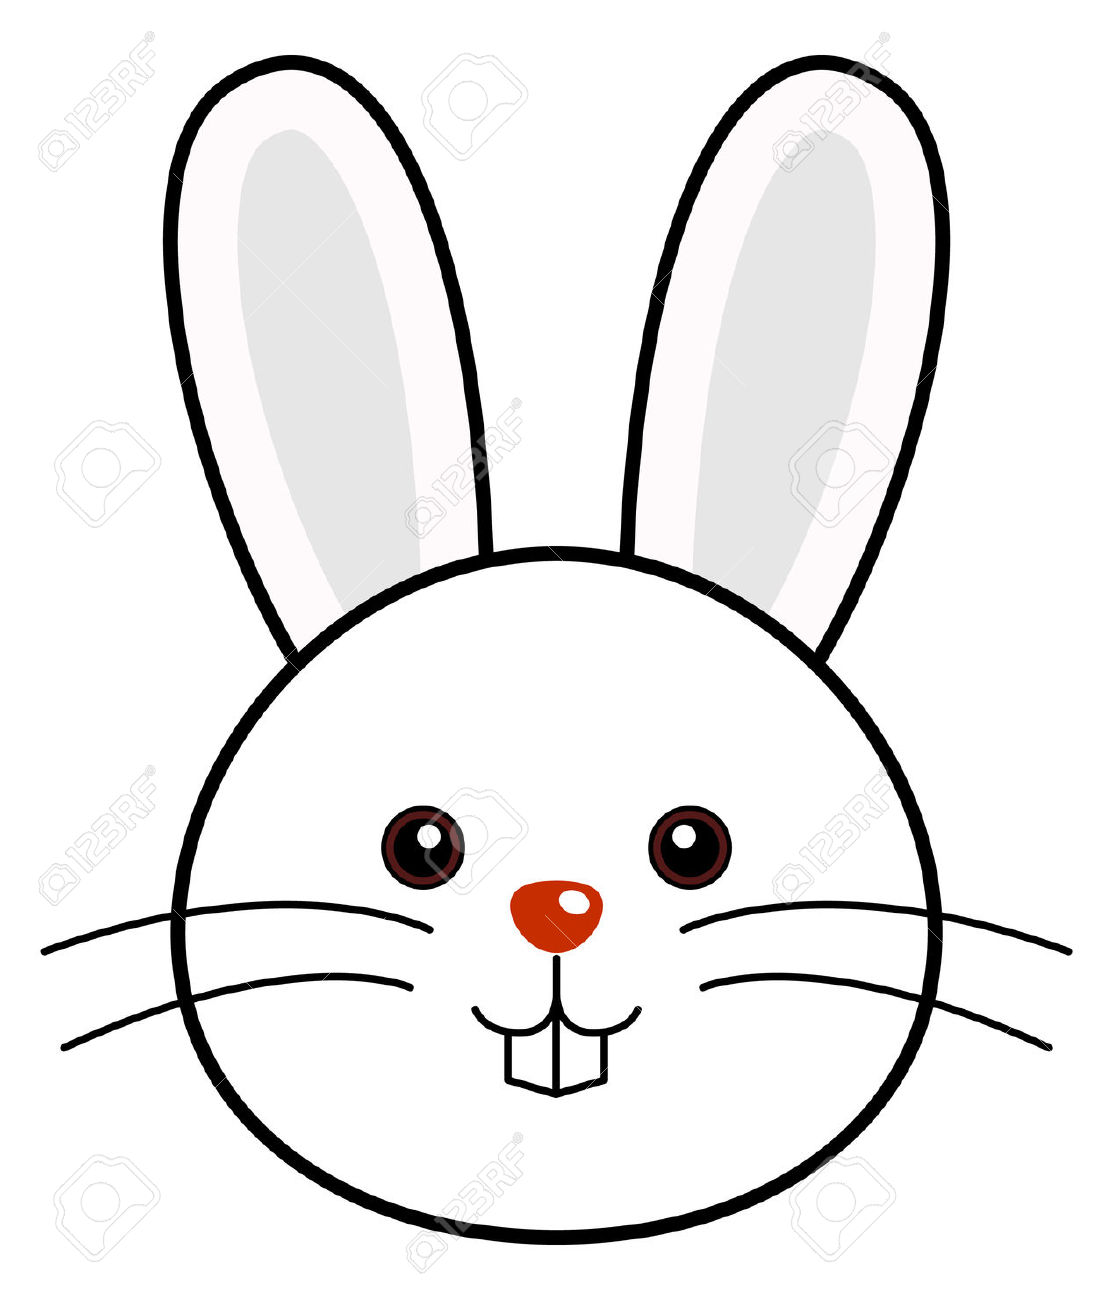 Cartoon Bunny Images - ClipArt Best